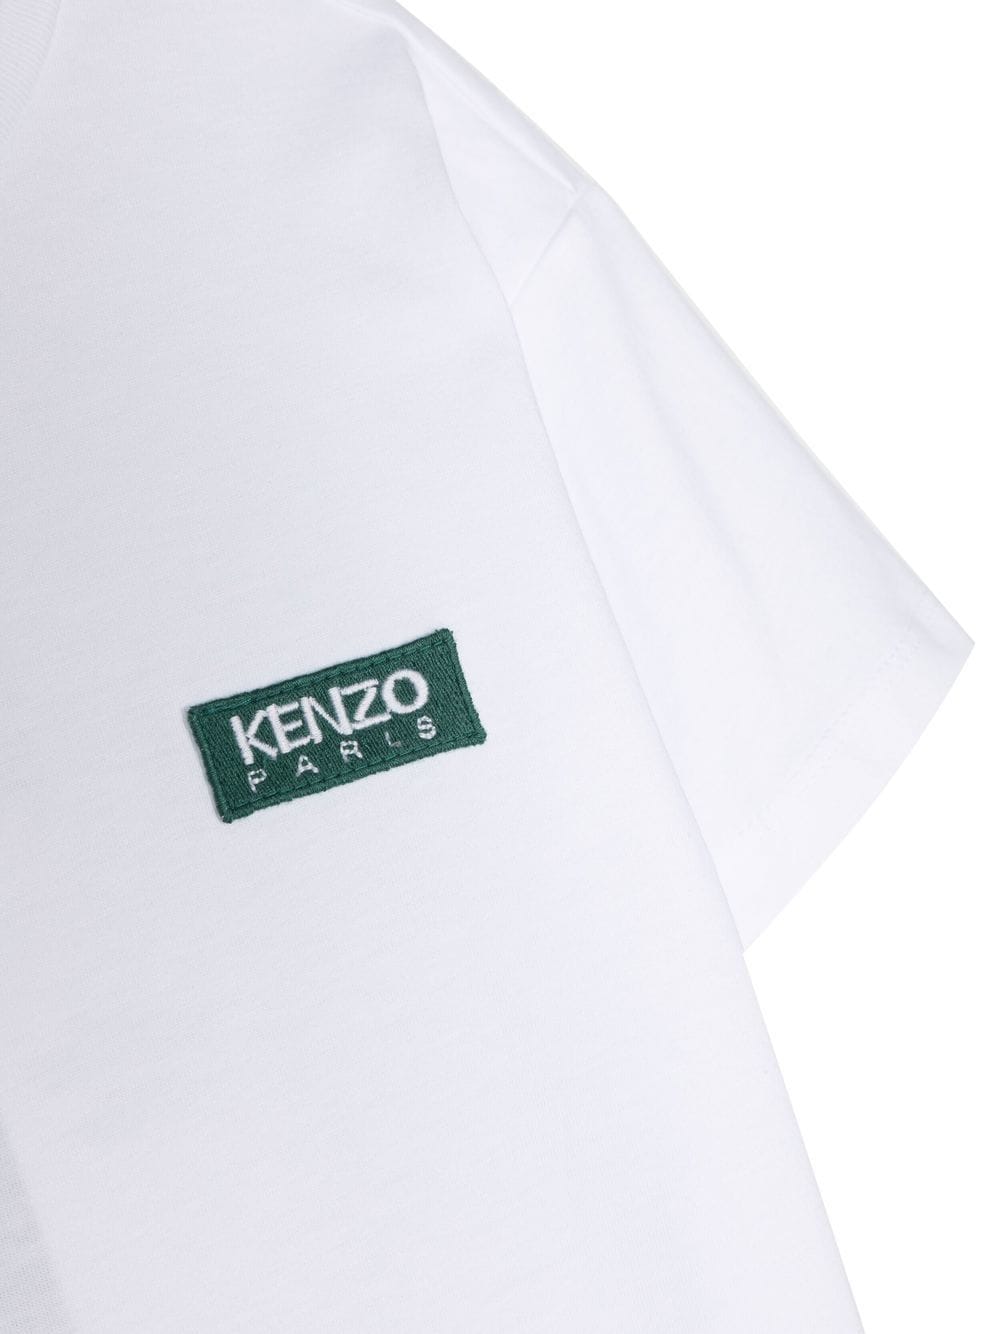 KENZO KIDS WHITE LOGO T-SHIRT